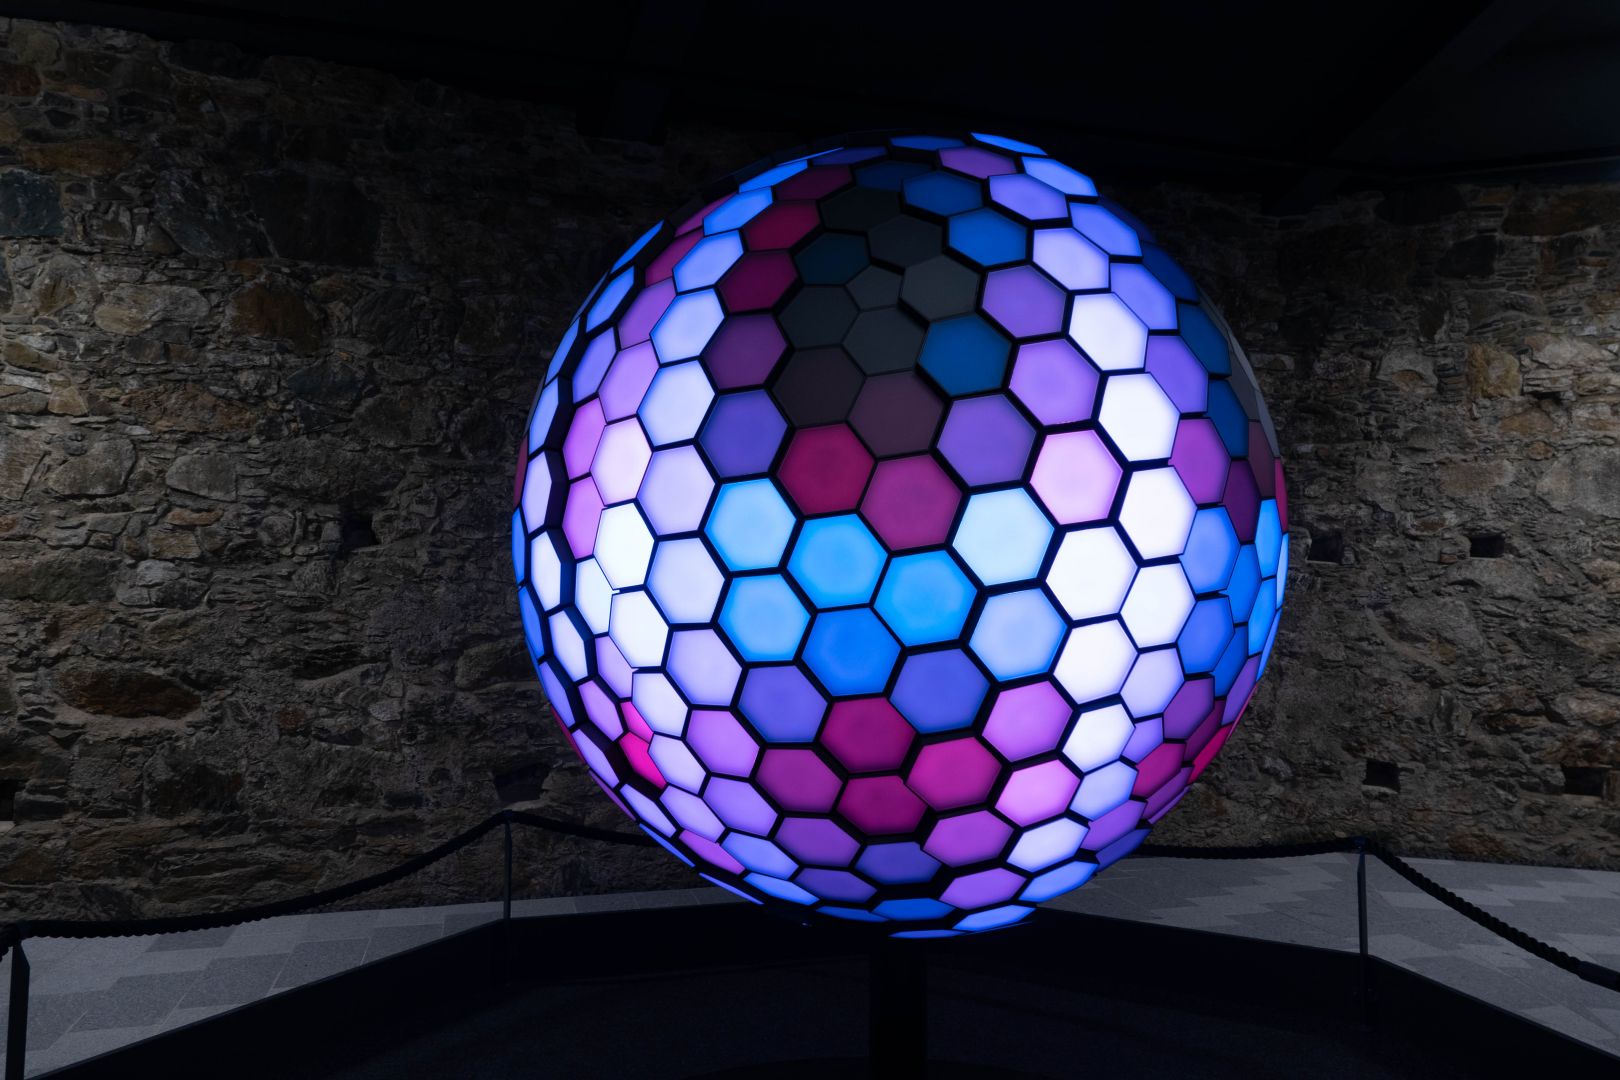 Mesmerising kinetic sphere made up of 80,000 LED lights – Morph